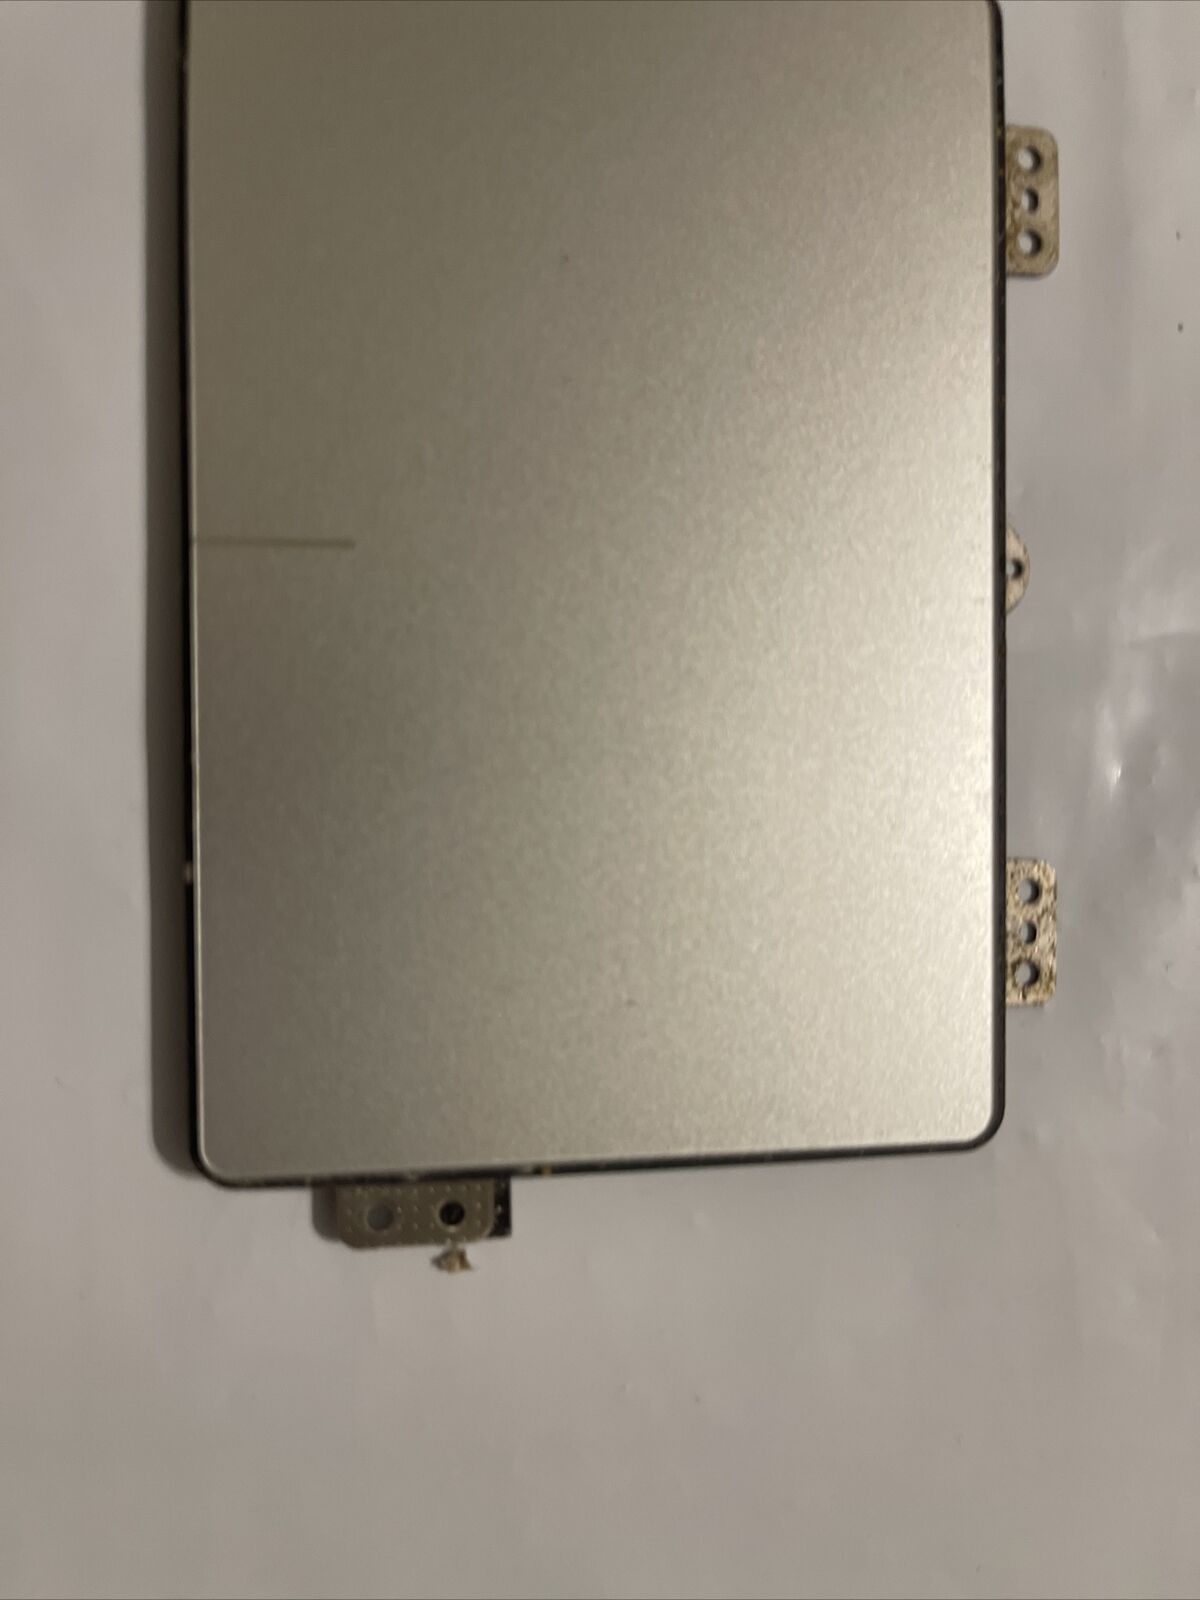 Genuine Lenovo 530-14 Flex 6-14 TouchPad 8SST60R4  no cable silver  ata